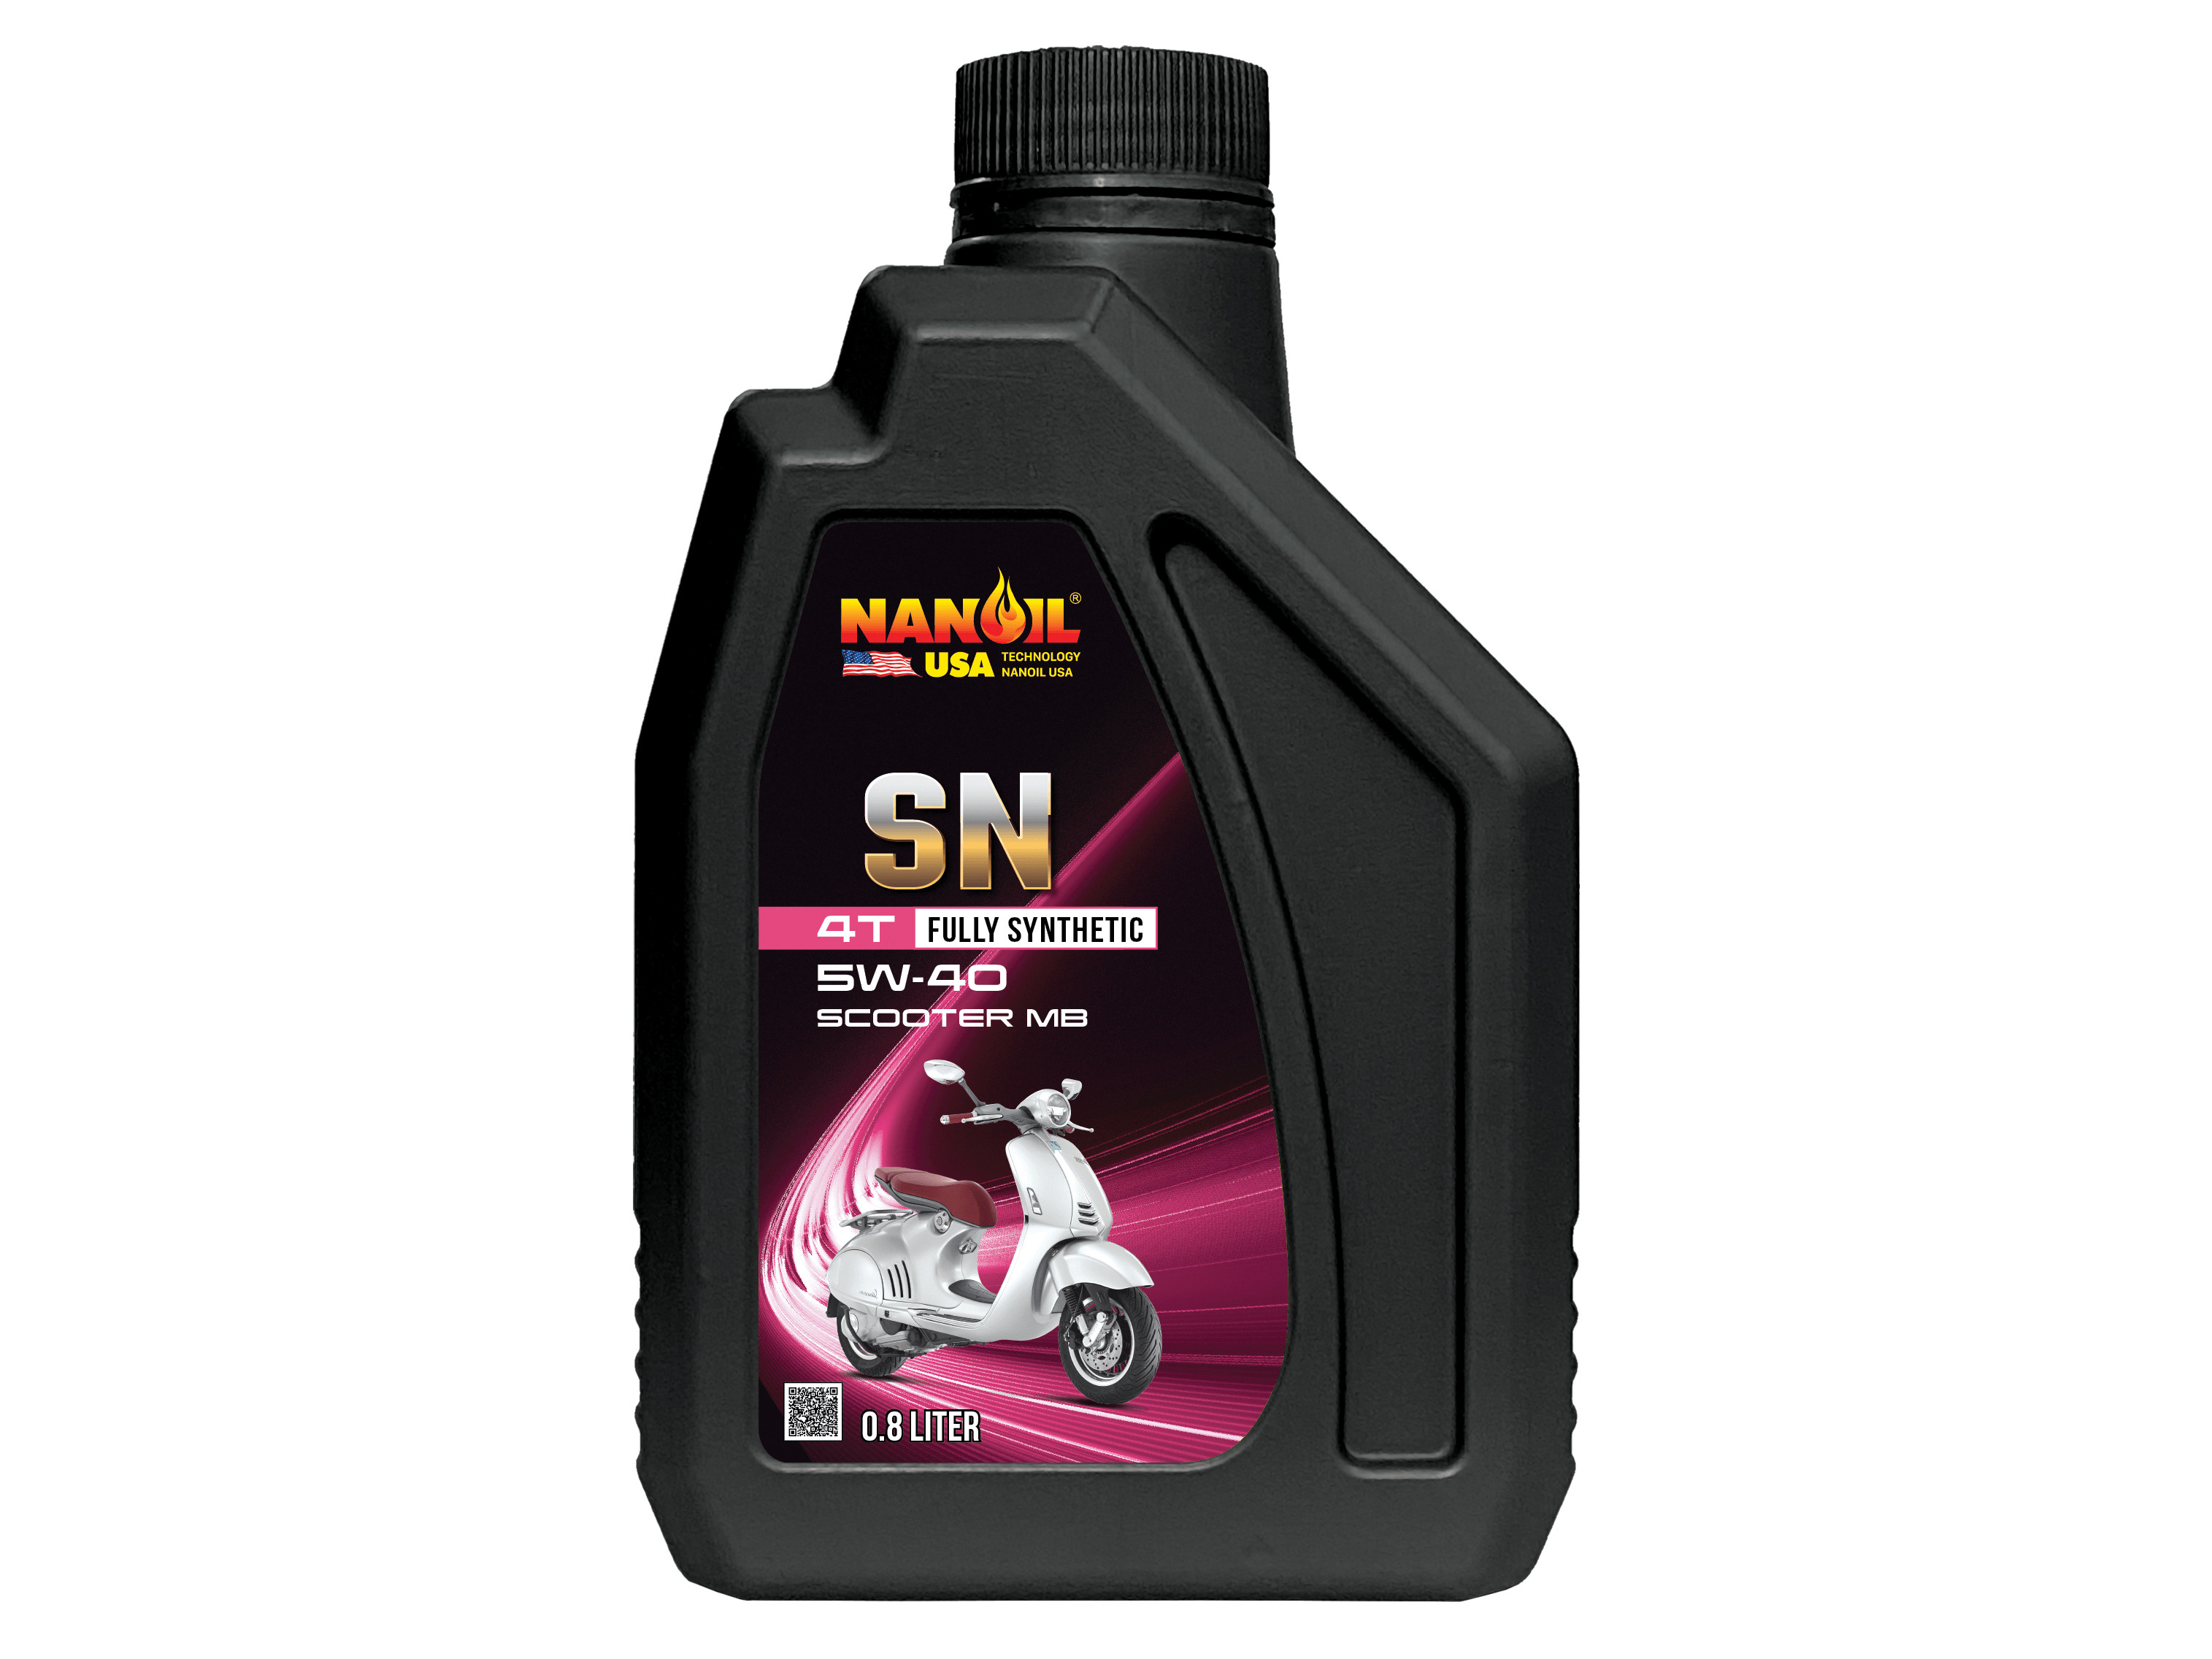 Nanoil USA SN Scooter